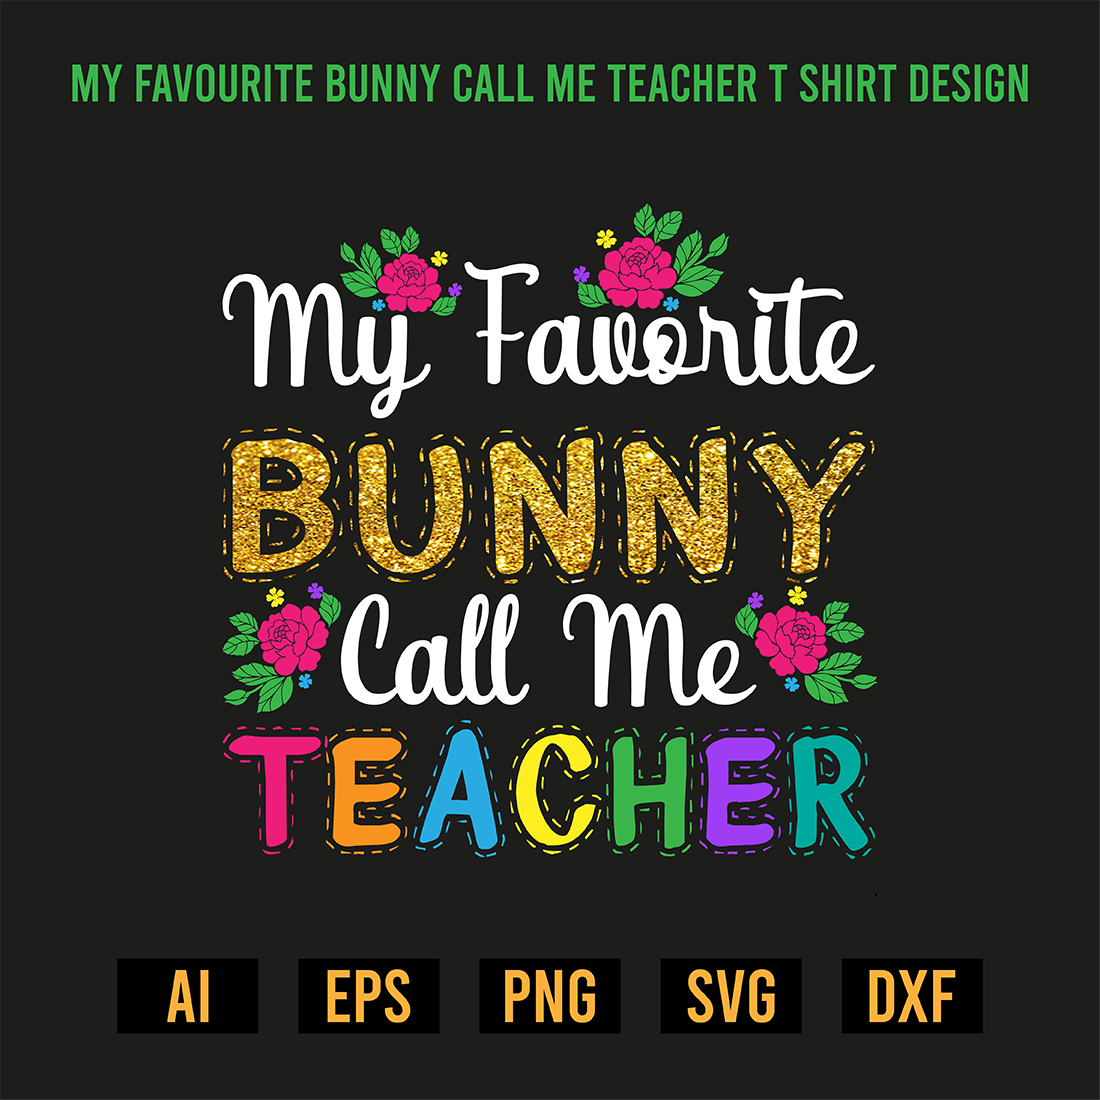 My Favorite Bunny Call Me Teacher T Shirt Design preview image.